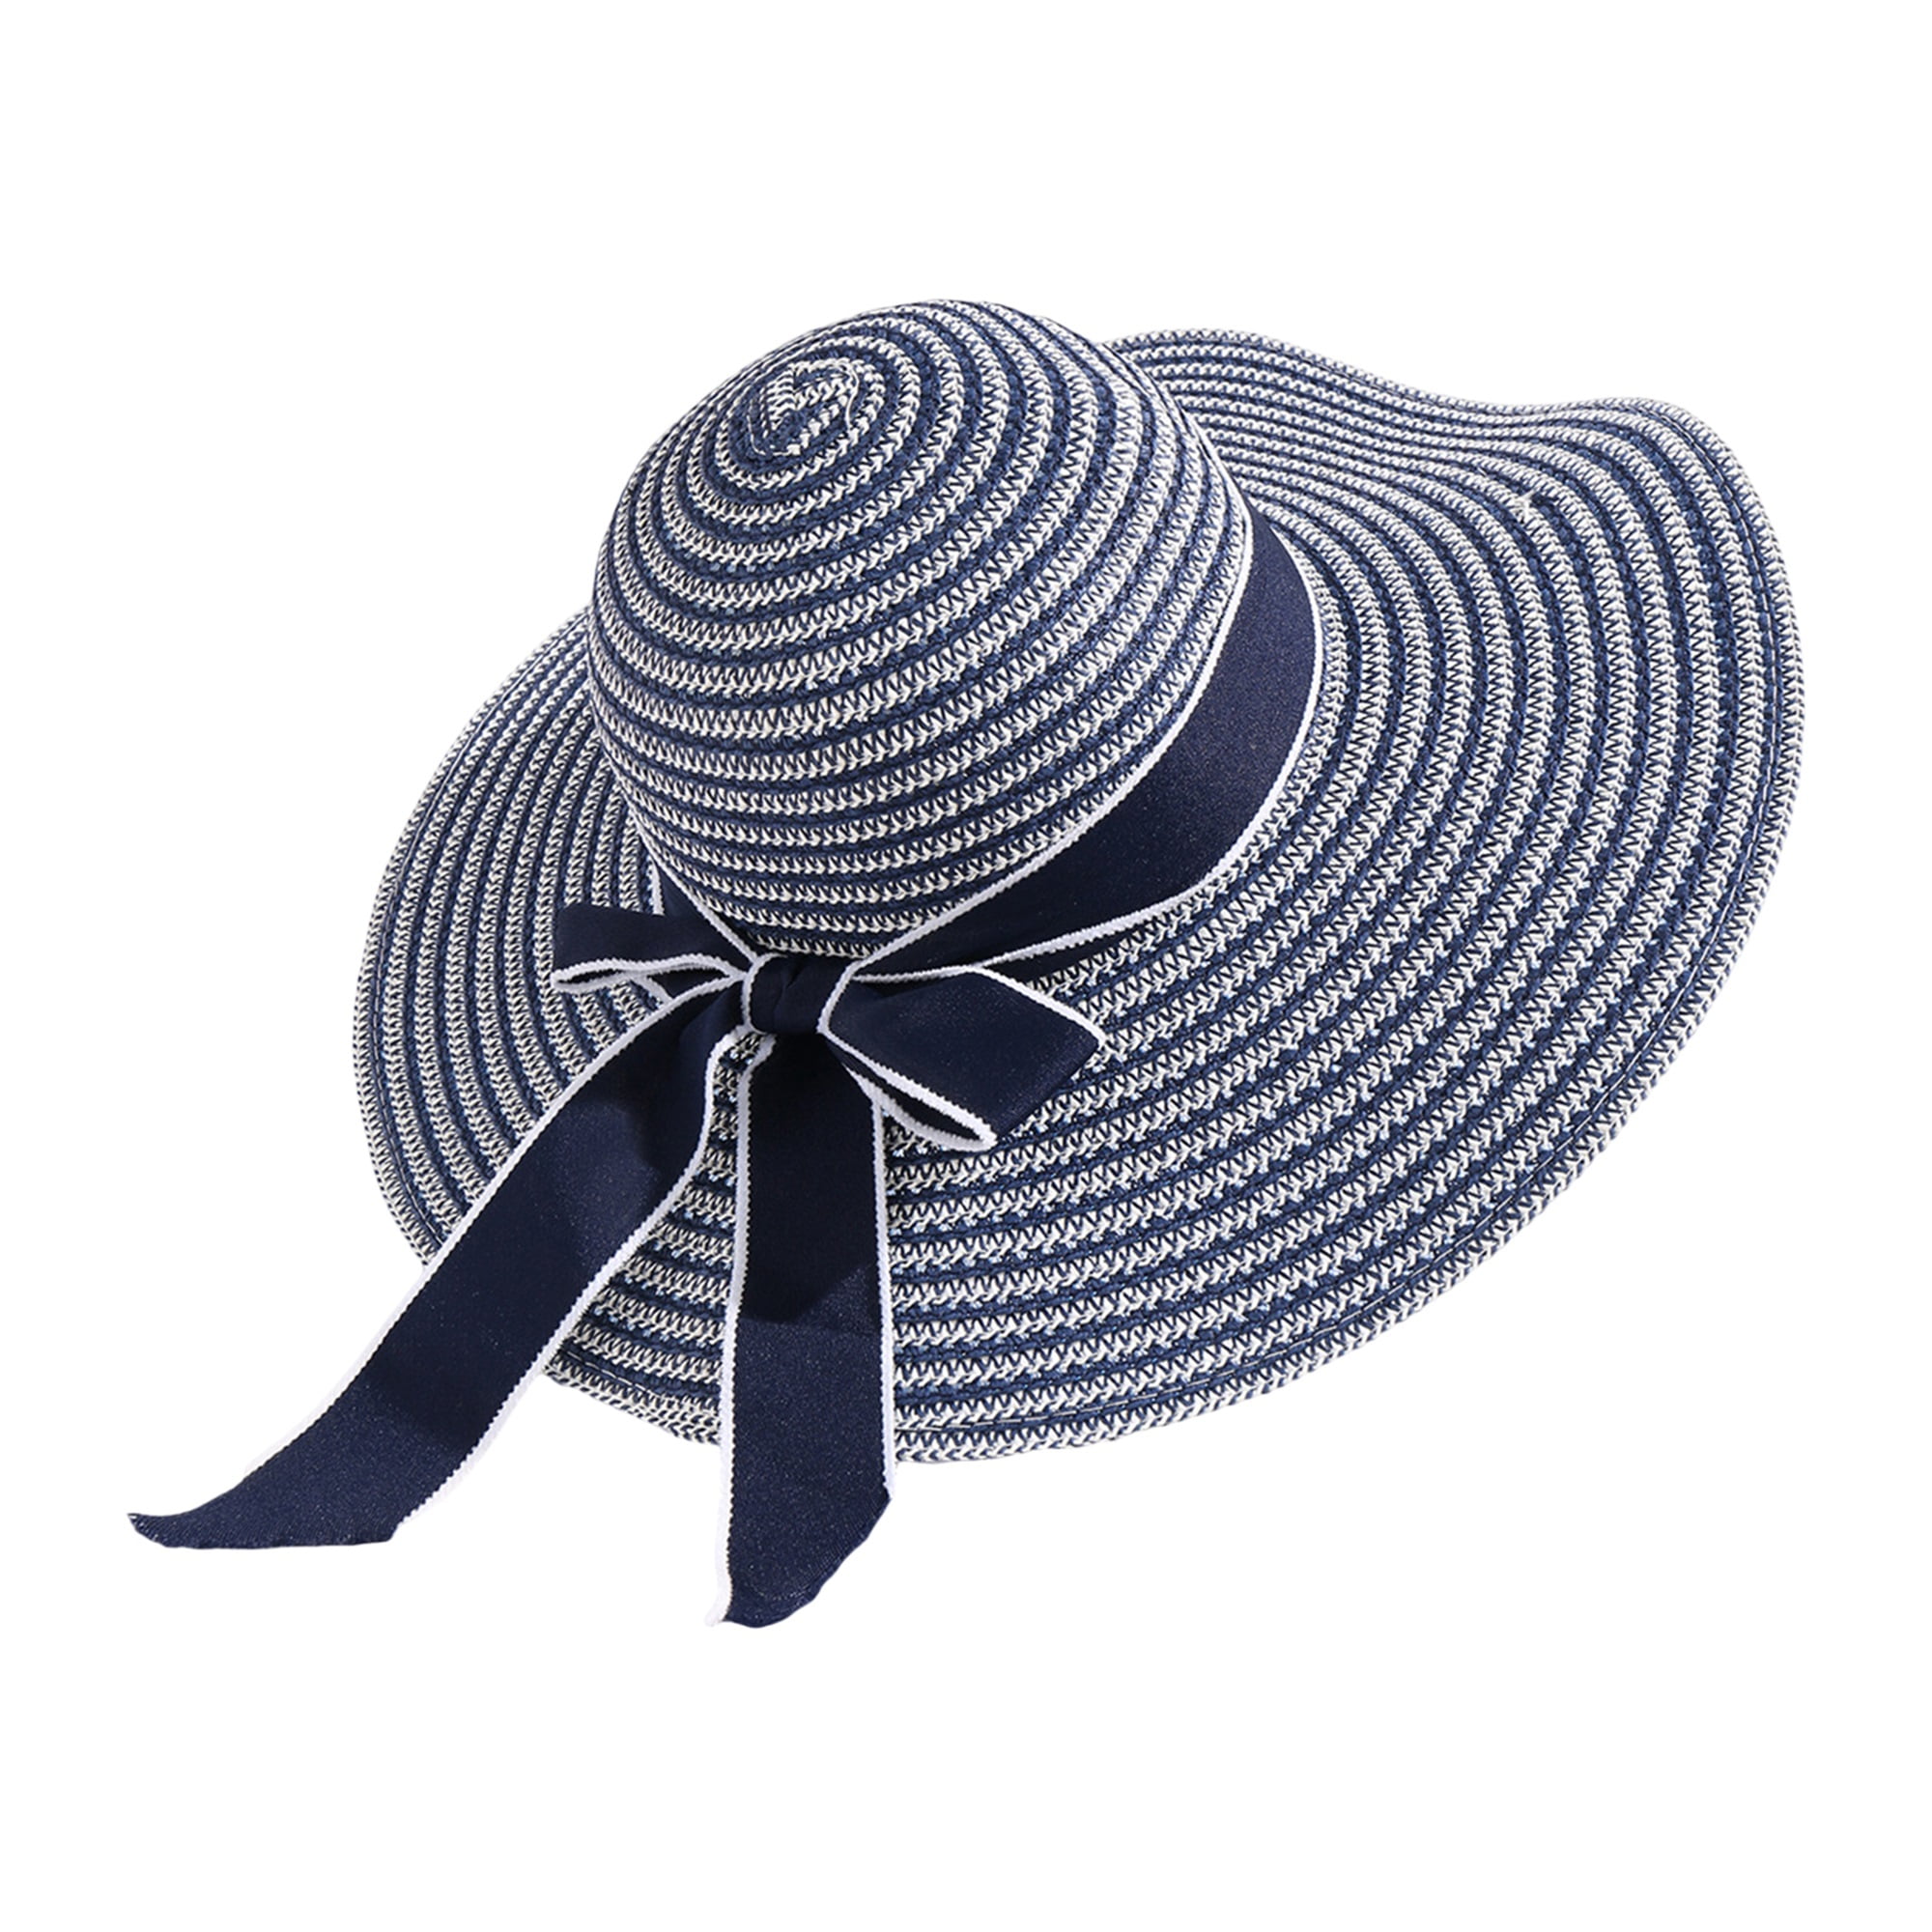 Gulirifei Women's Beach Straw Hat Wide Brim Bow Ribbon Summer Sun Hat for Daily Travel Sunshade Straw Hat, Size: One Size